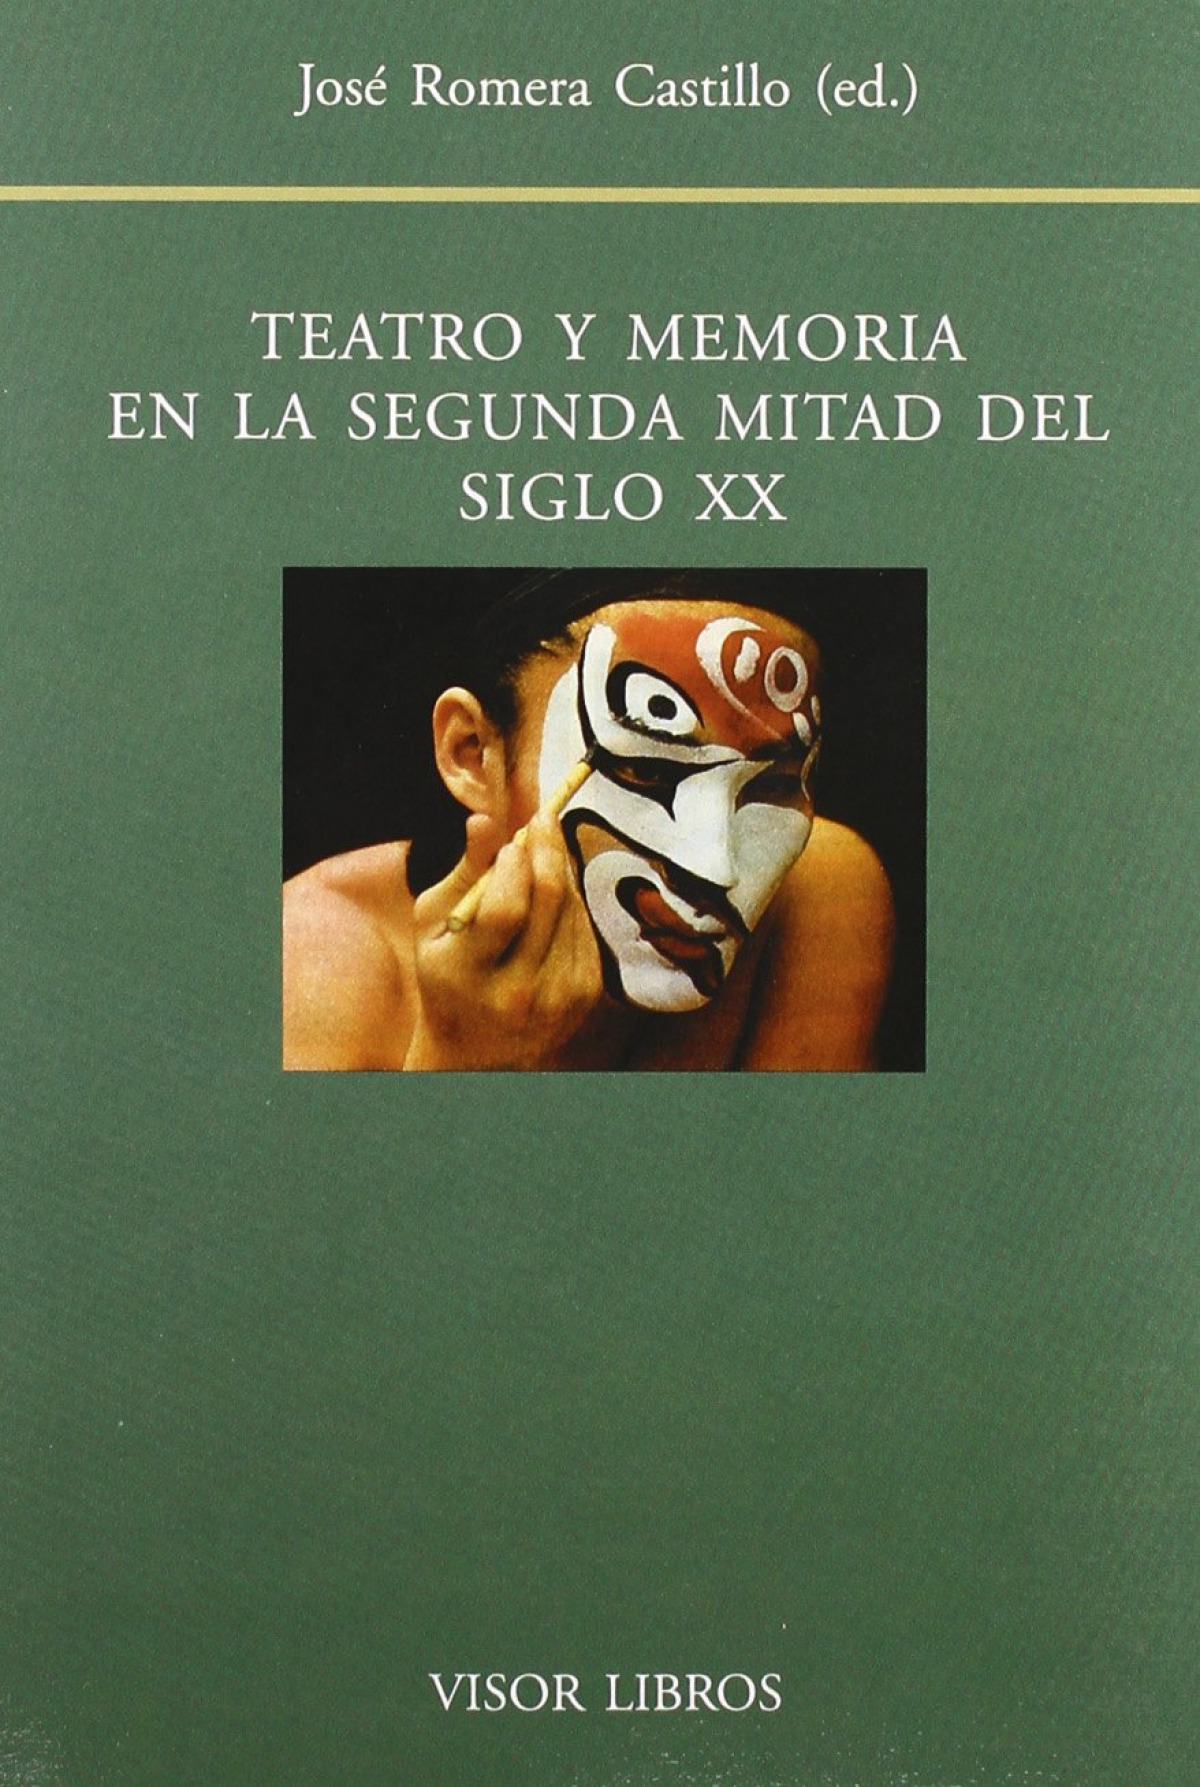 Teatro y memoria segunda mitad siglo XX - Romera Castillo, Jose